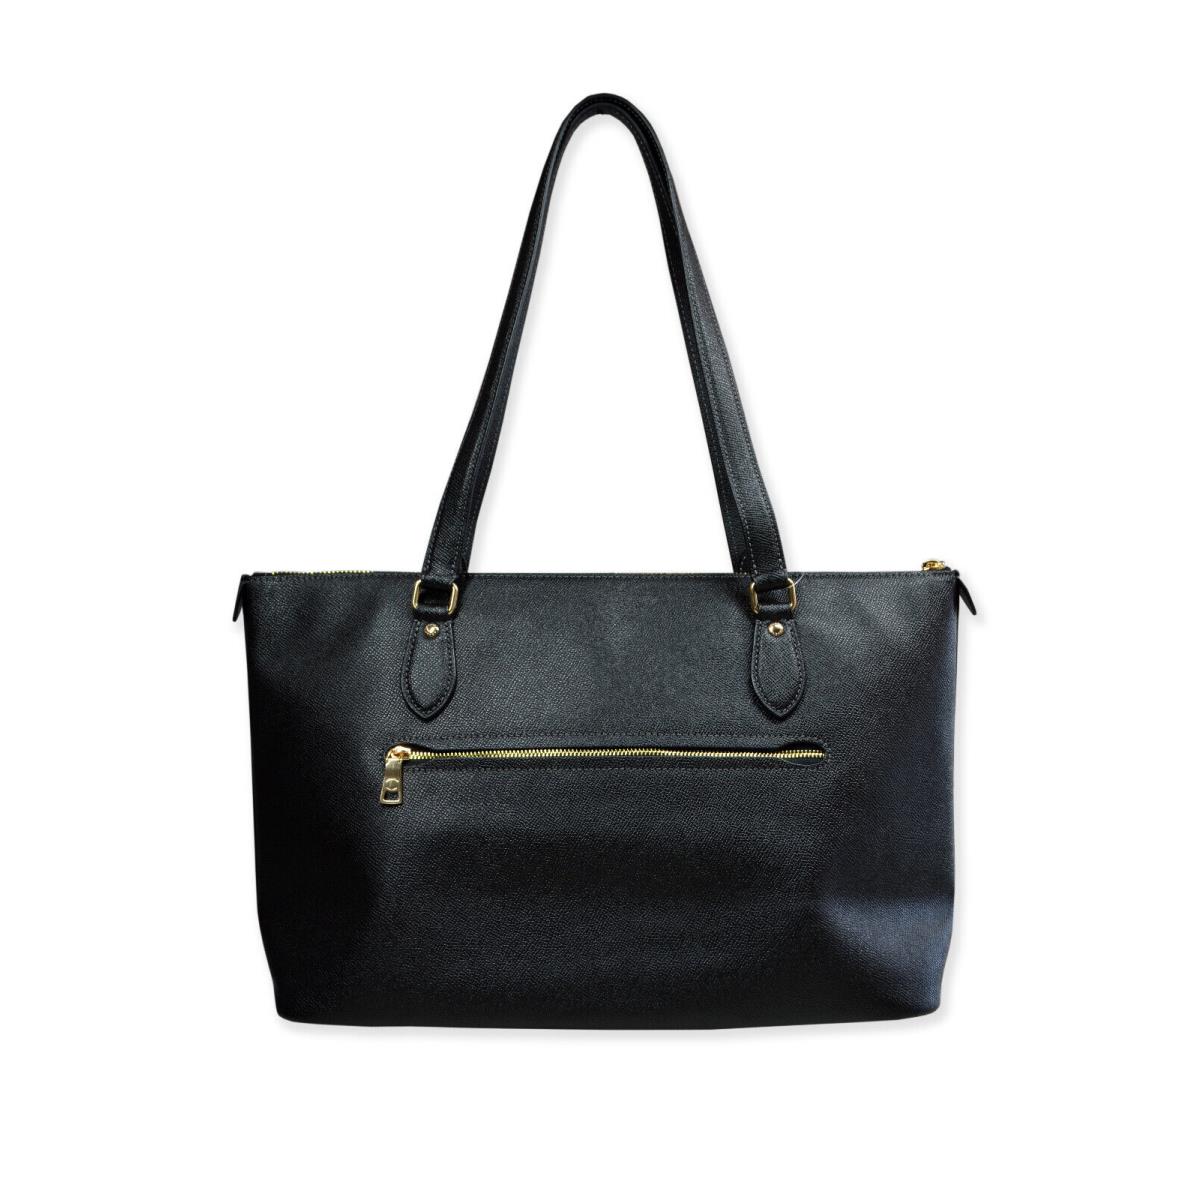 Coach  bag   - Brown Handle/Strap, Gold Hardware, Black Exterior 1